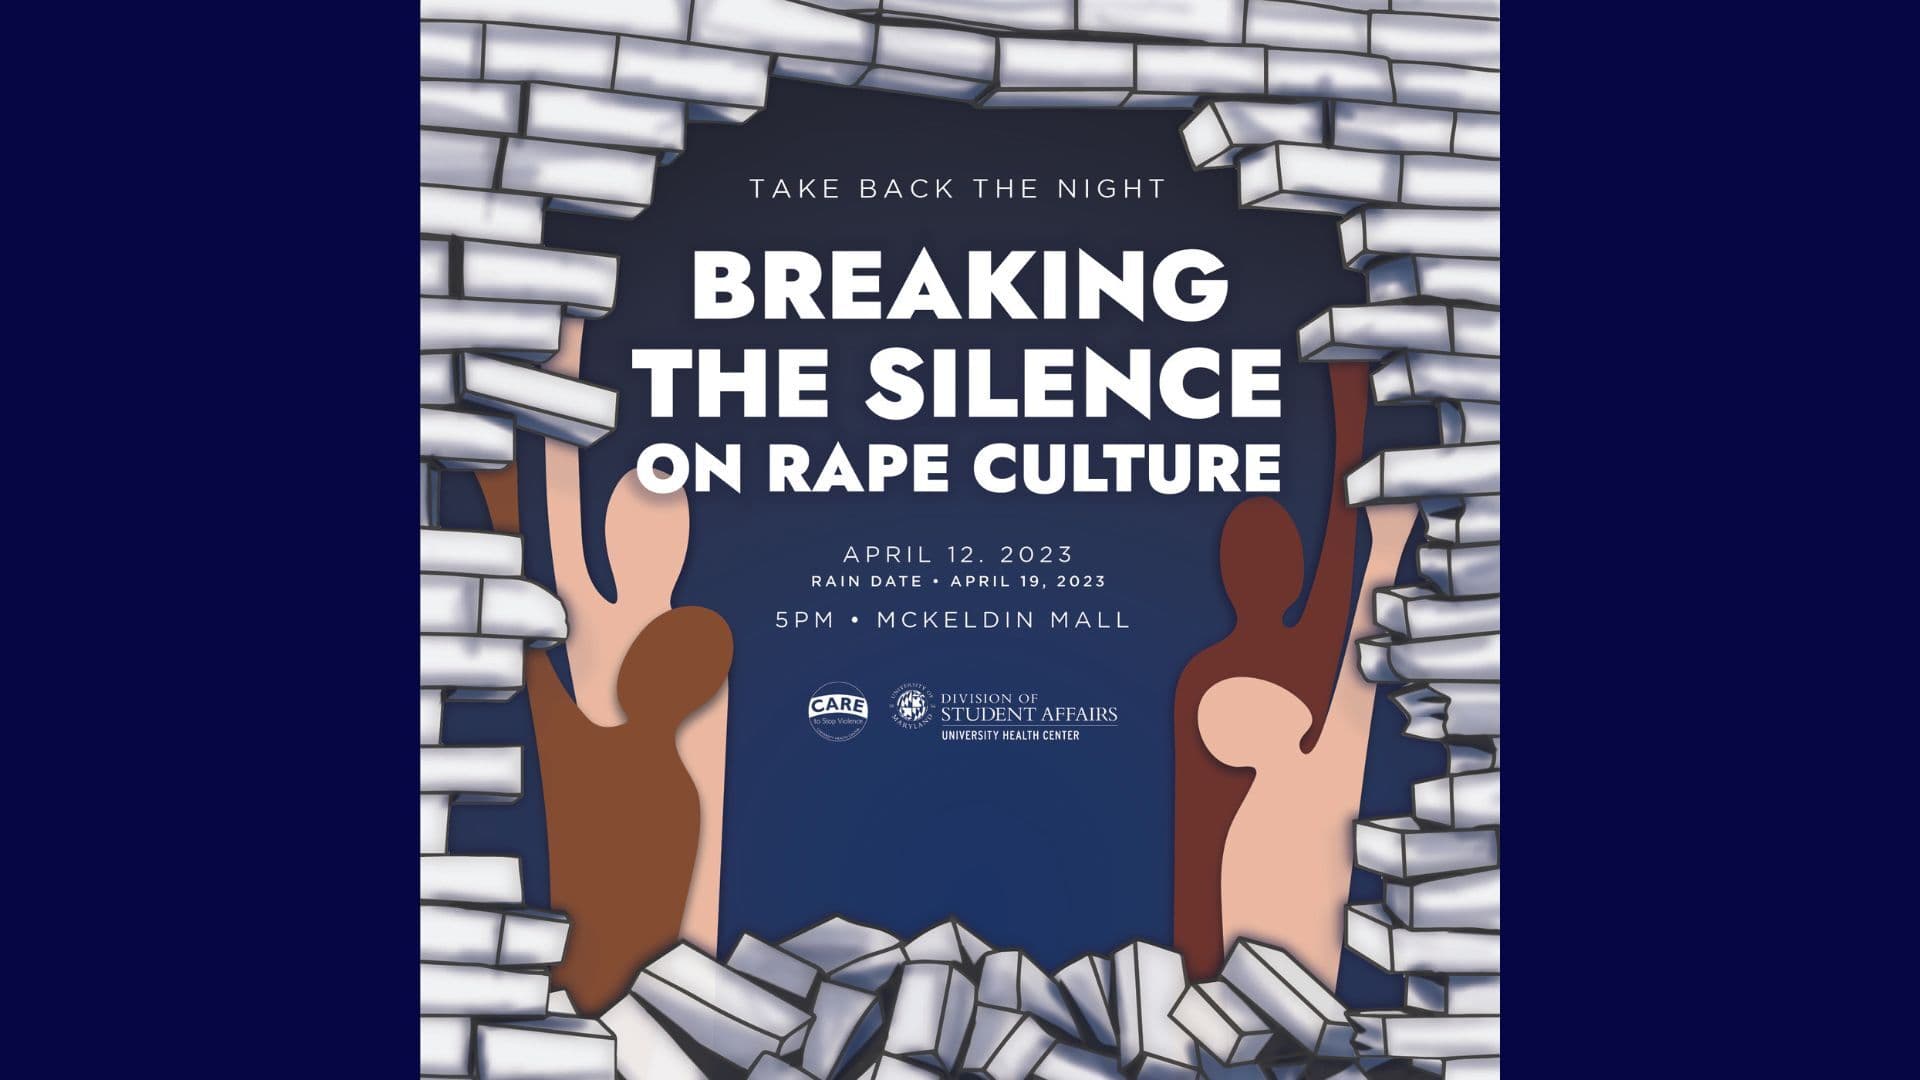 TBTN Breaking the Silence on Rape Culture